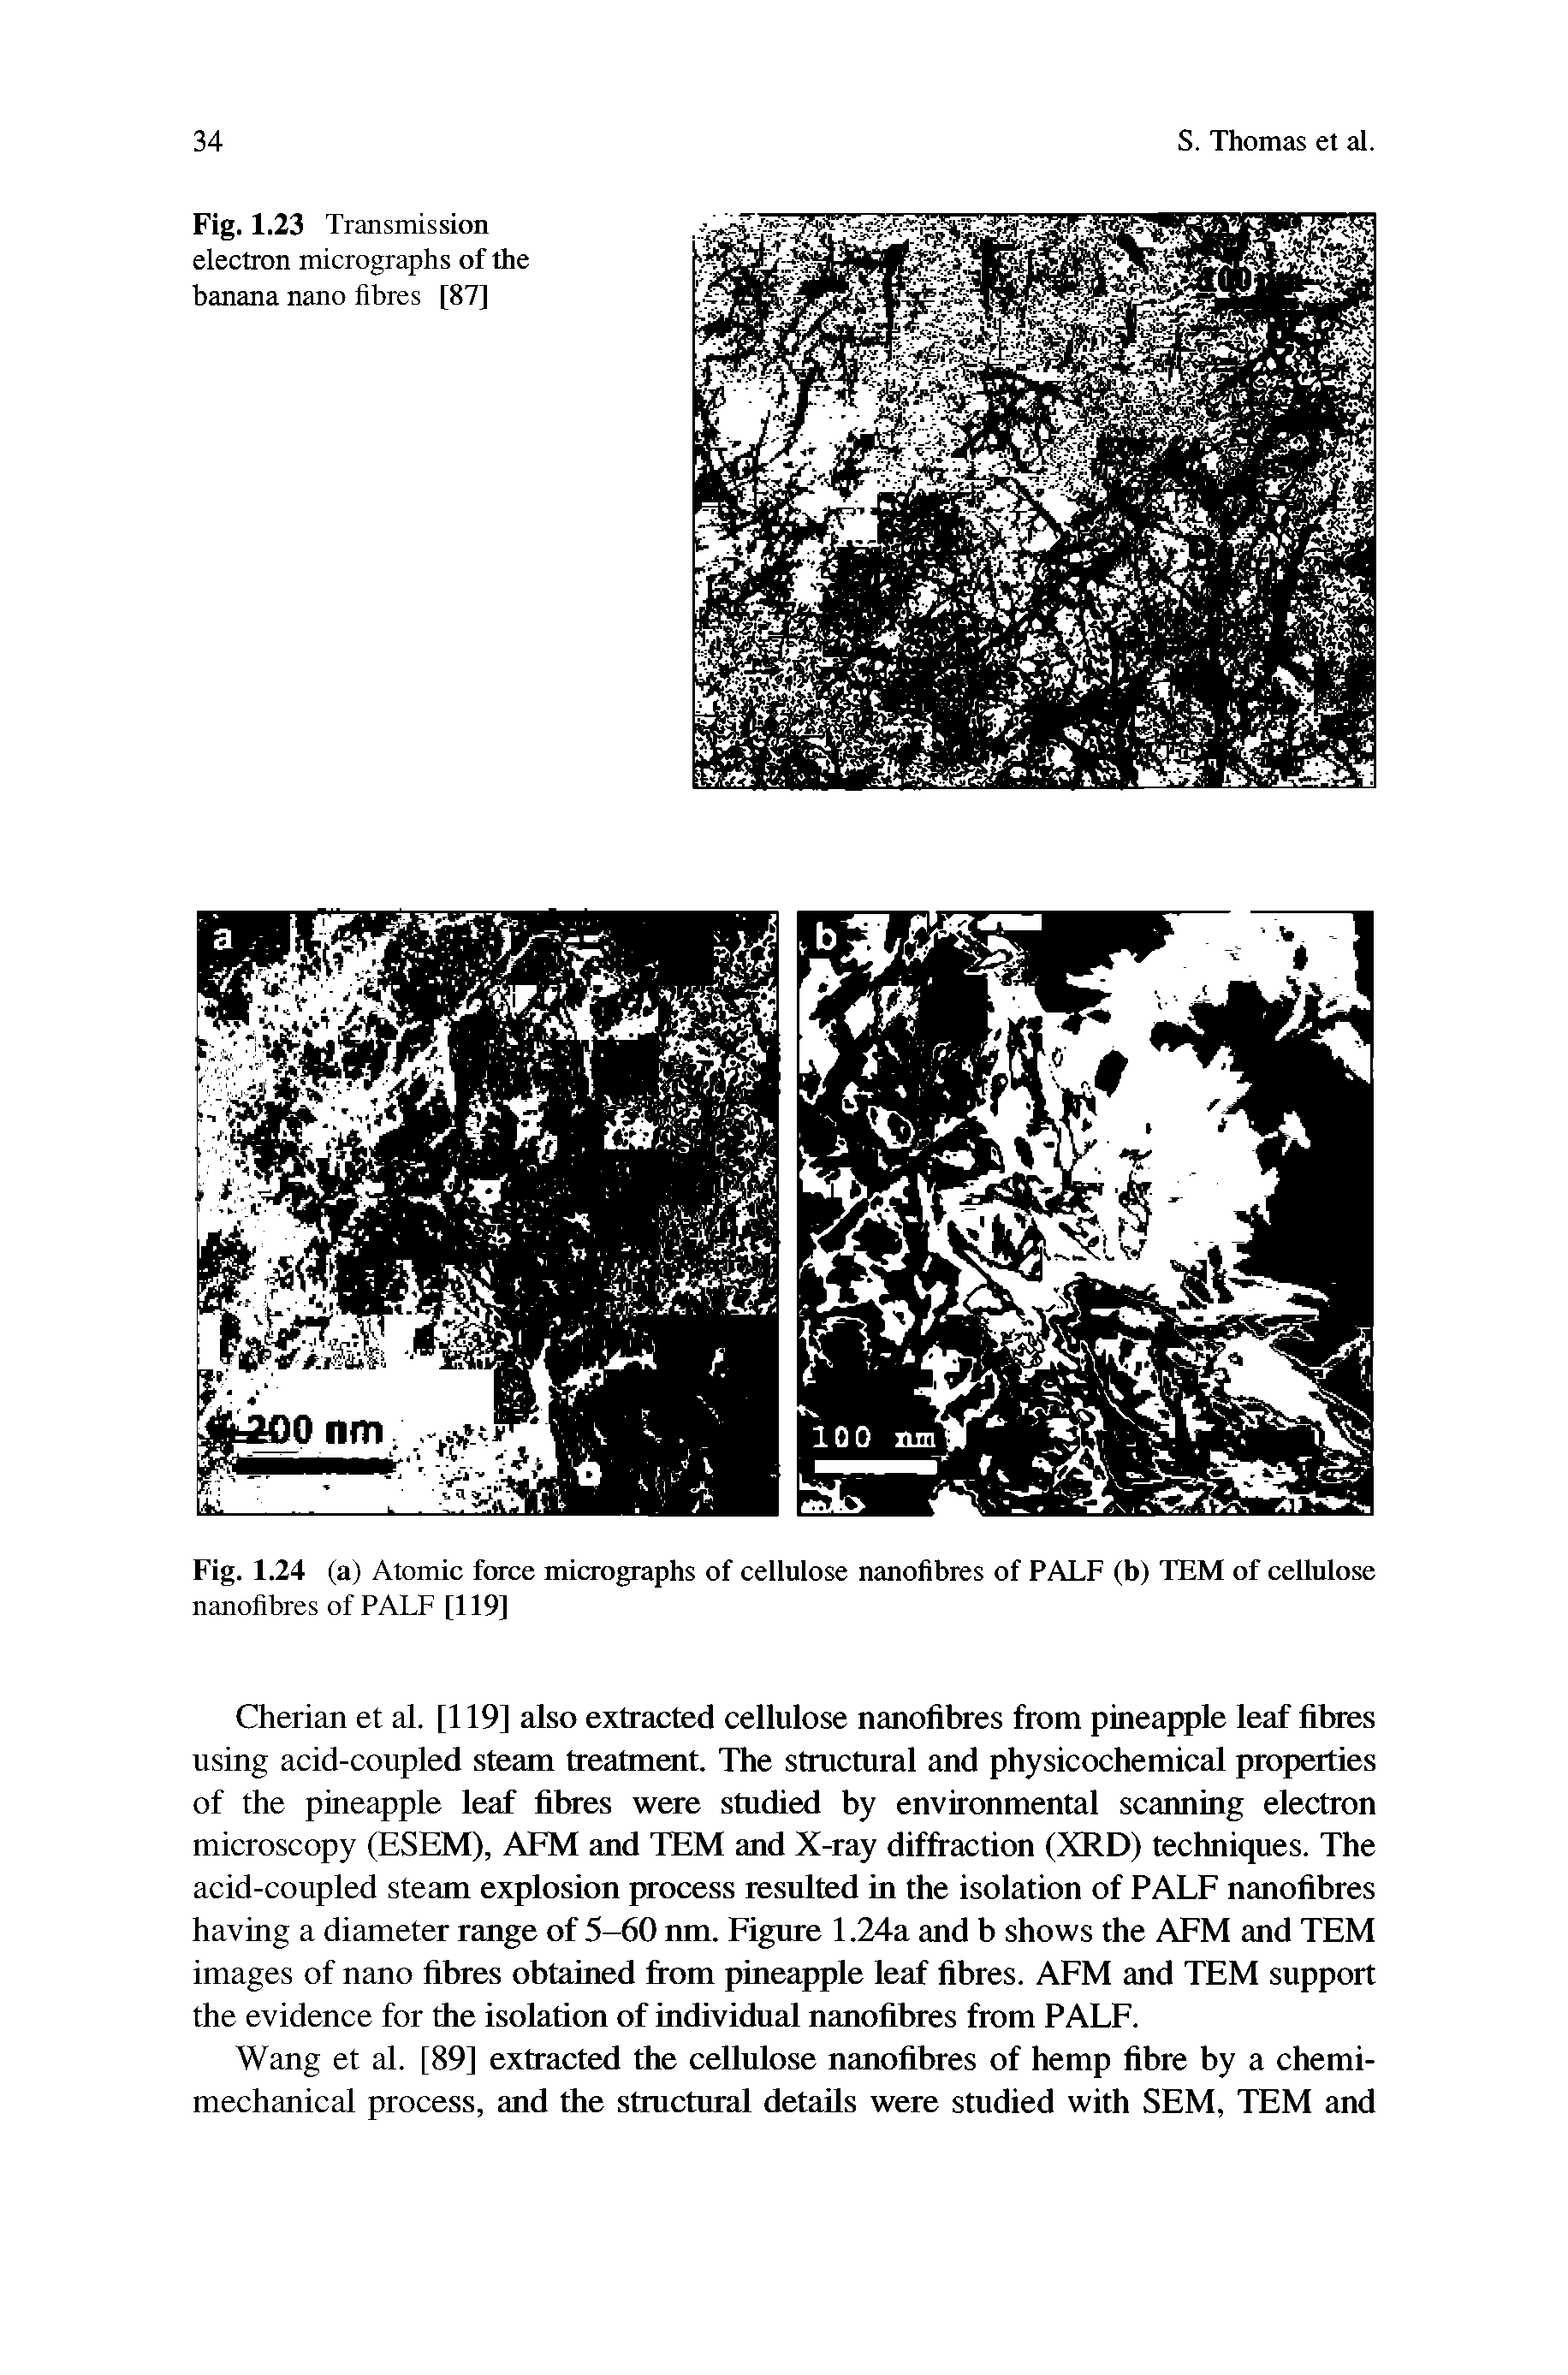 Fig. 1.23 Transmission electron micrographs of the banana nano fibres [87]...